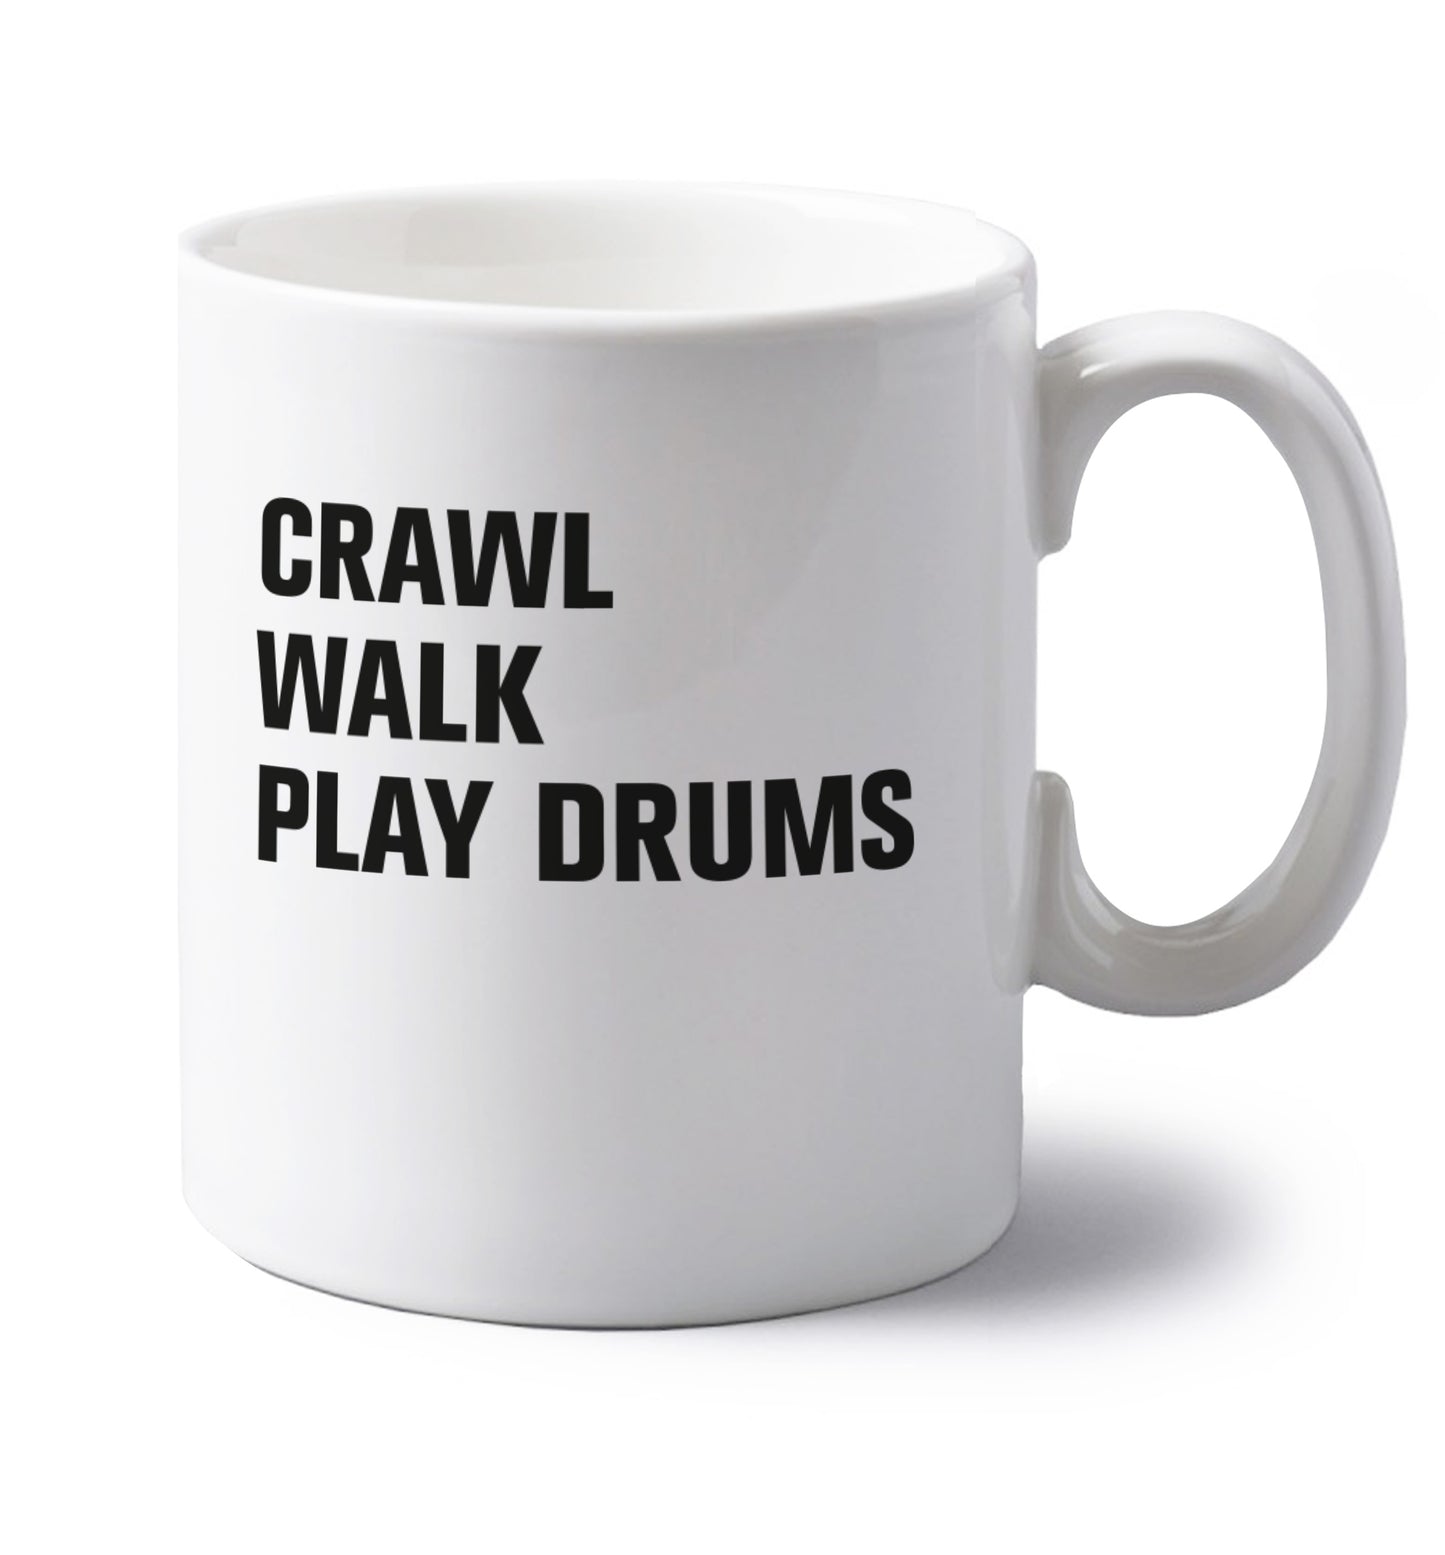 Crawl walk play drums left handed white ceramic mug 